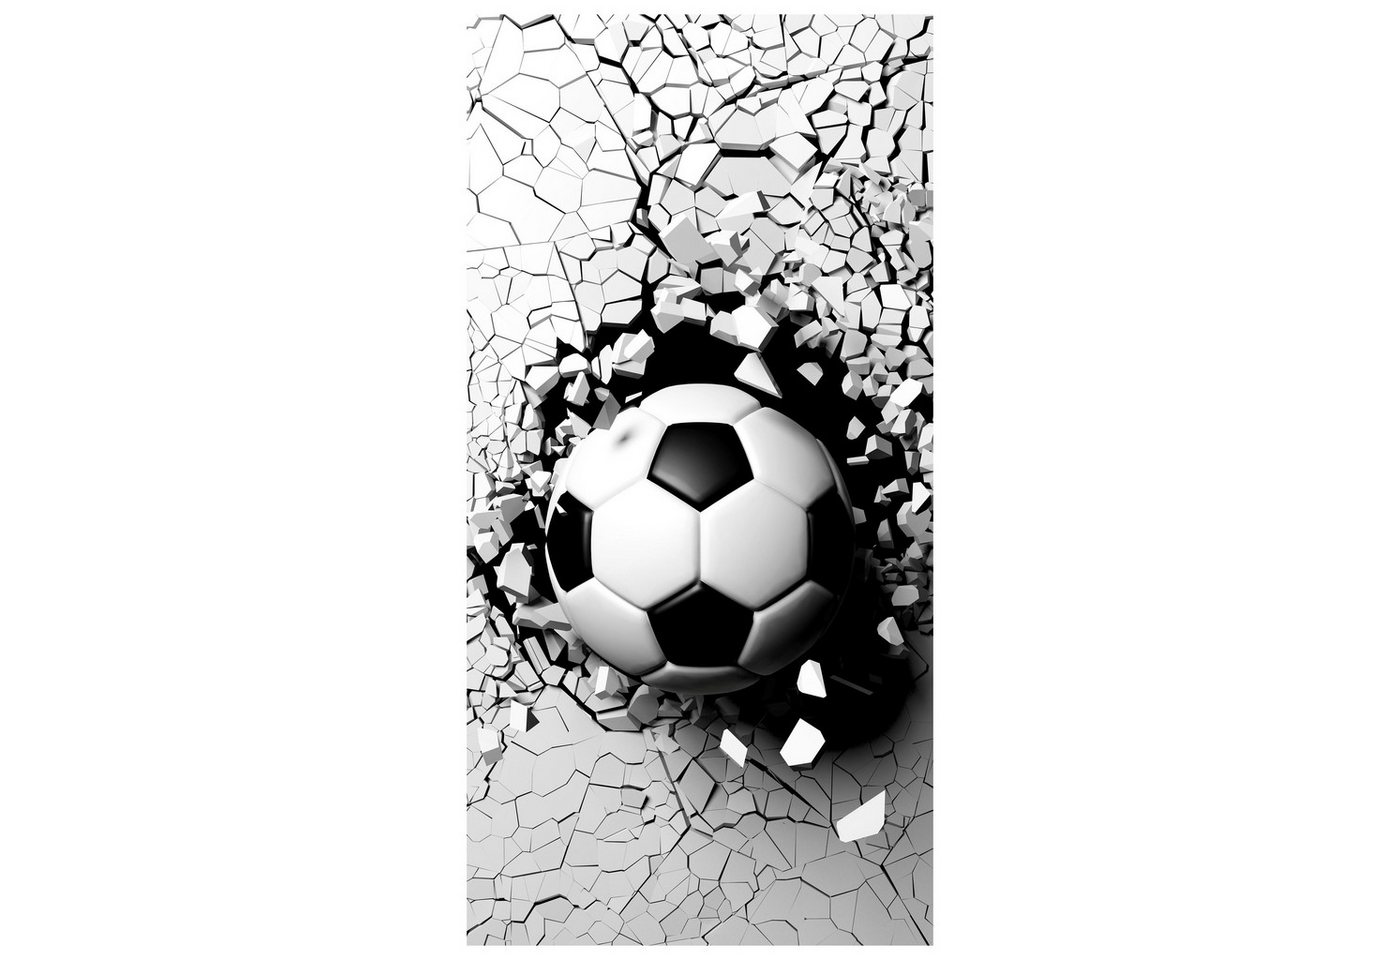 wandmotiv24 Türtapete Fussball durch Wand, 3D, Sport, Ball, strukturiert, Fototapete, Wandtapete, Motivtapete, matt, selbstklebende Vinyltapete von wandmotiv24